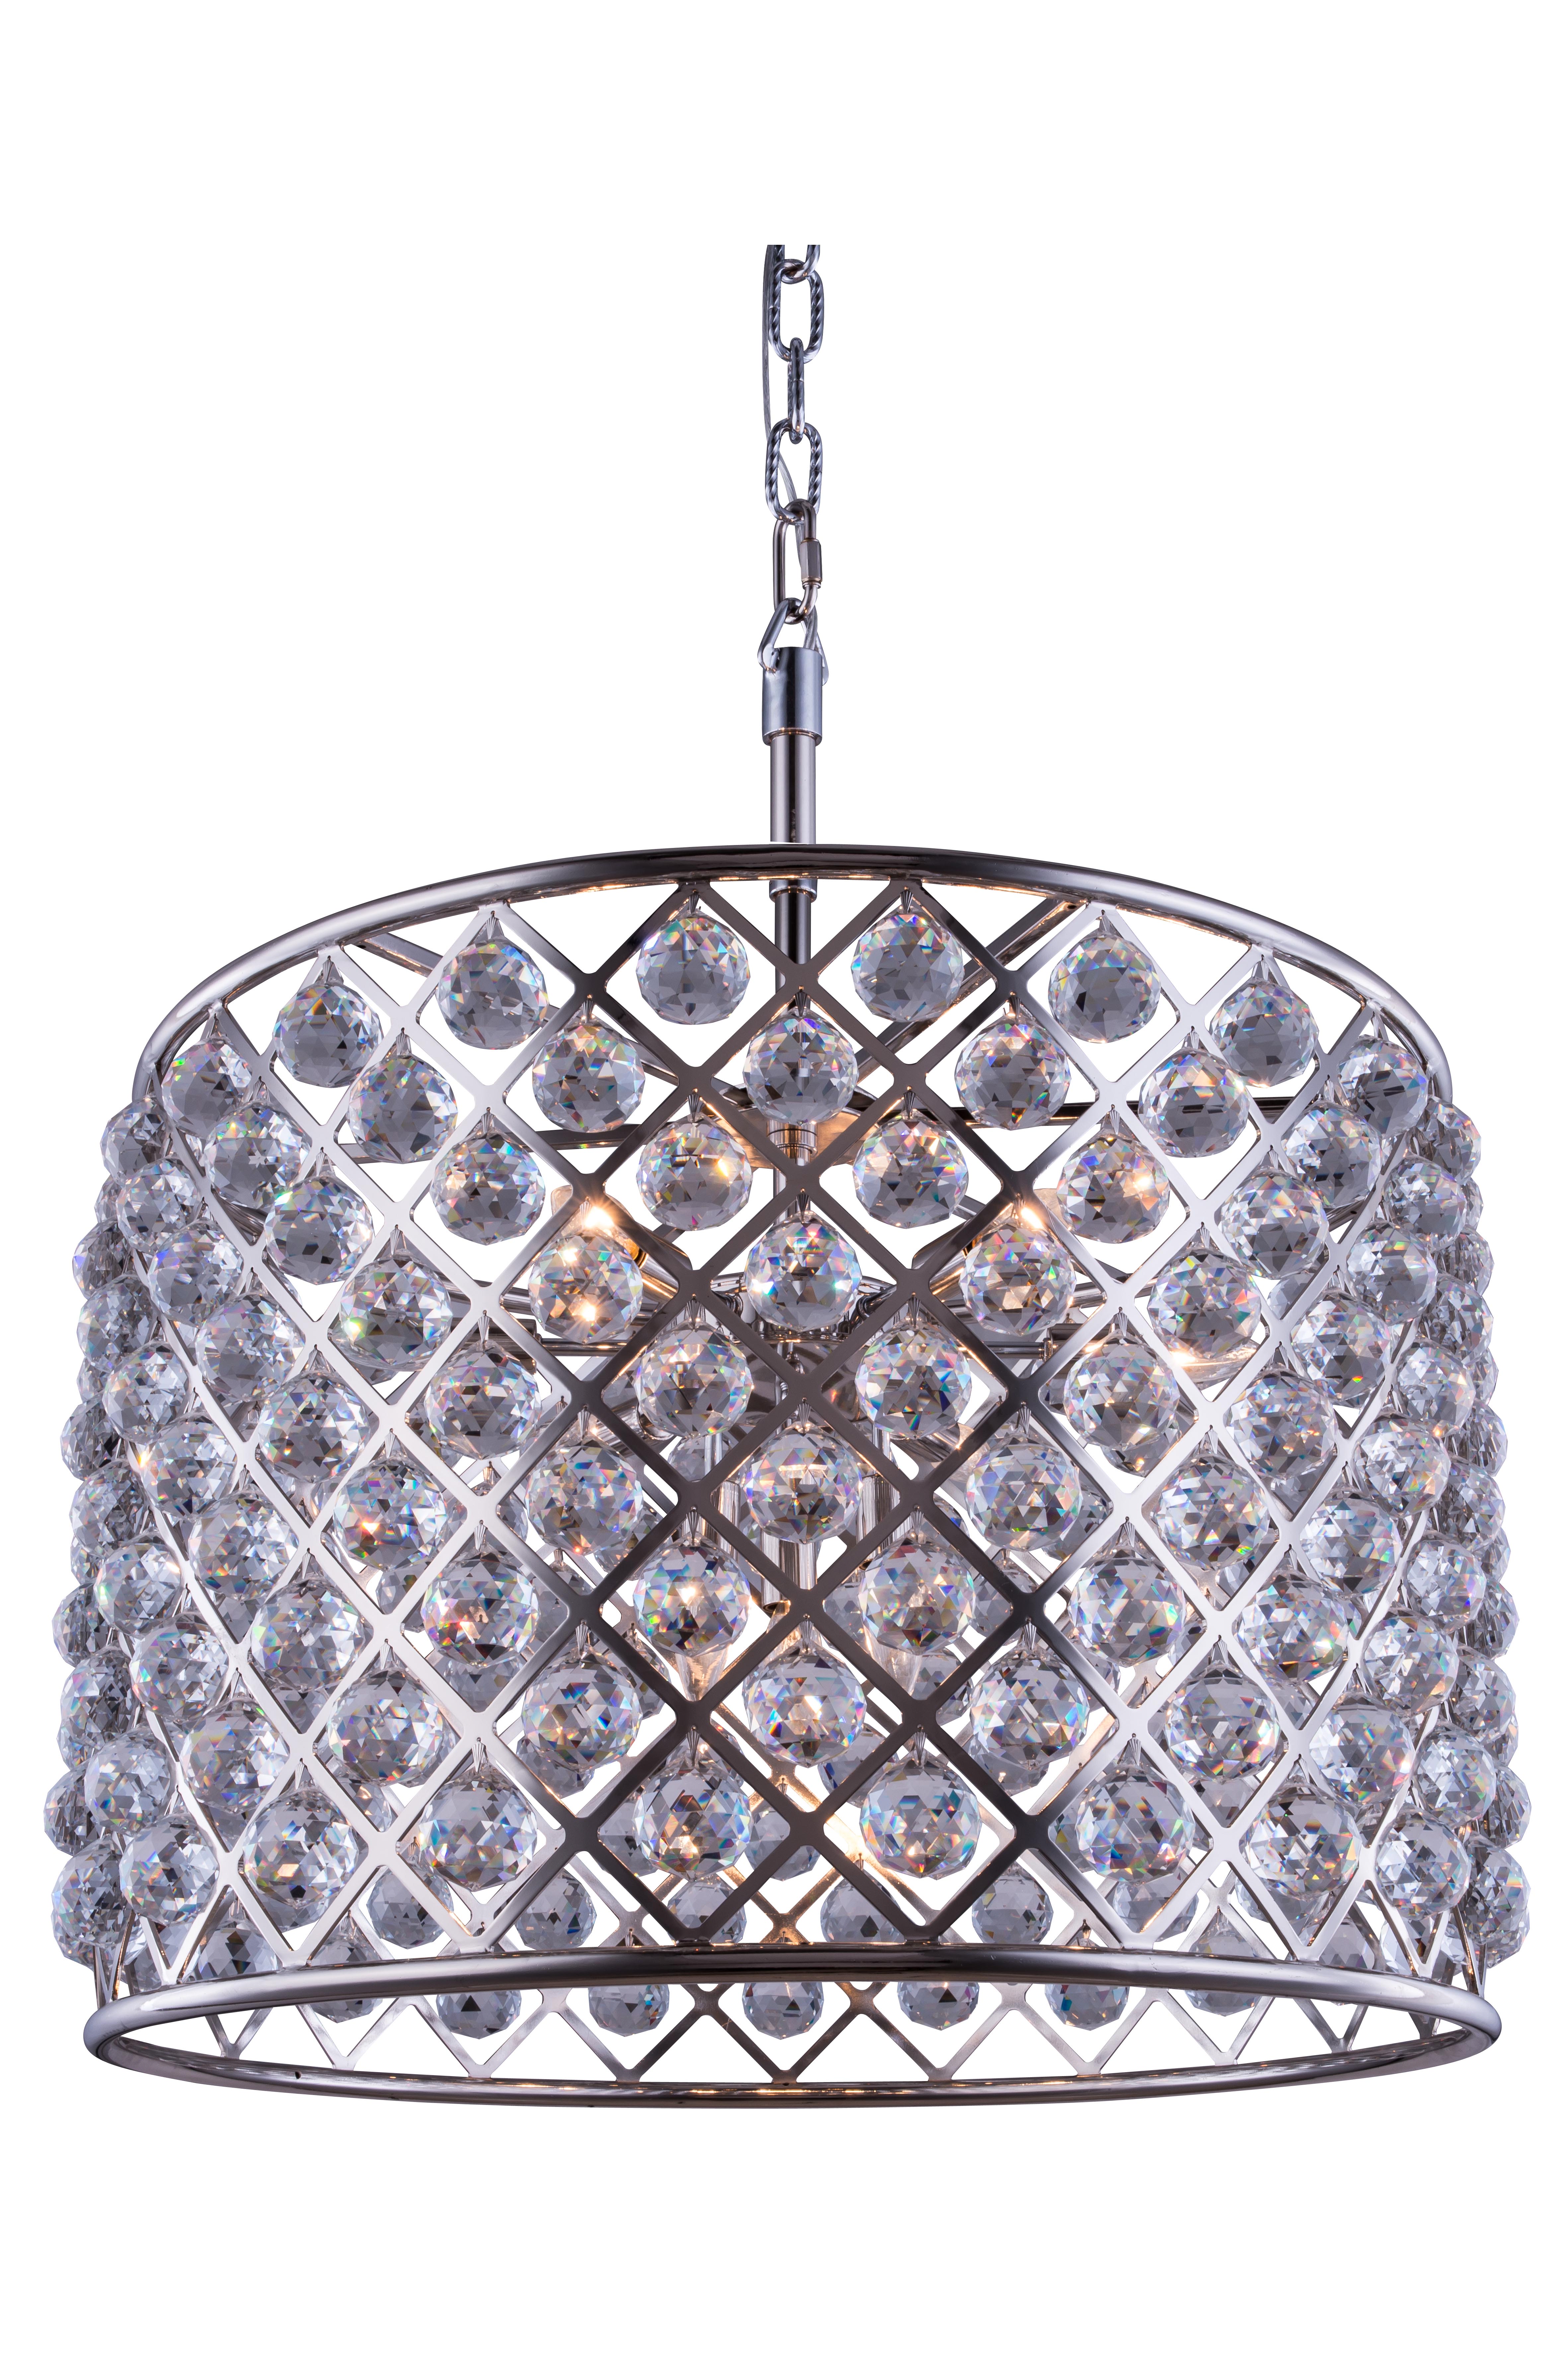 Elegant Lighting 1206 Madison Collection Pendent lamp D:27.5" H:21" Lt:8 Polished nickel Finish (Royal Cut  Crystals)